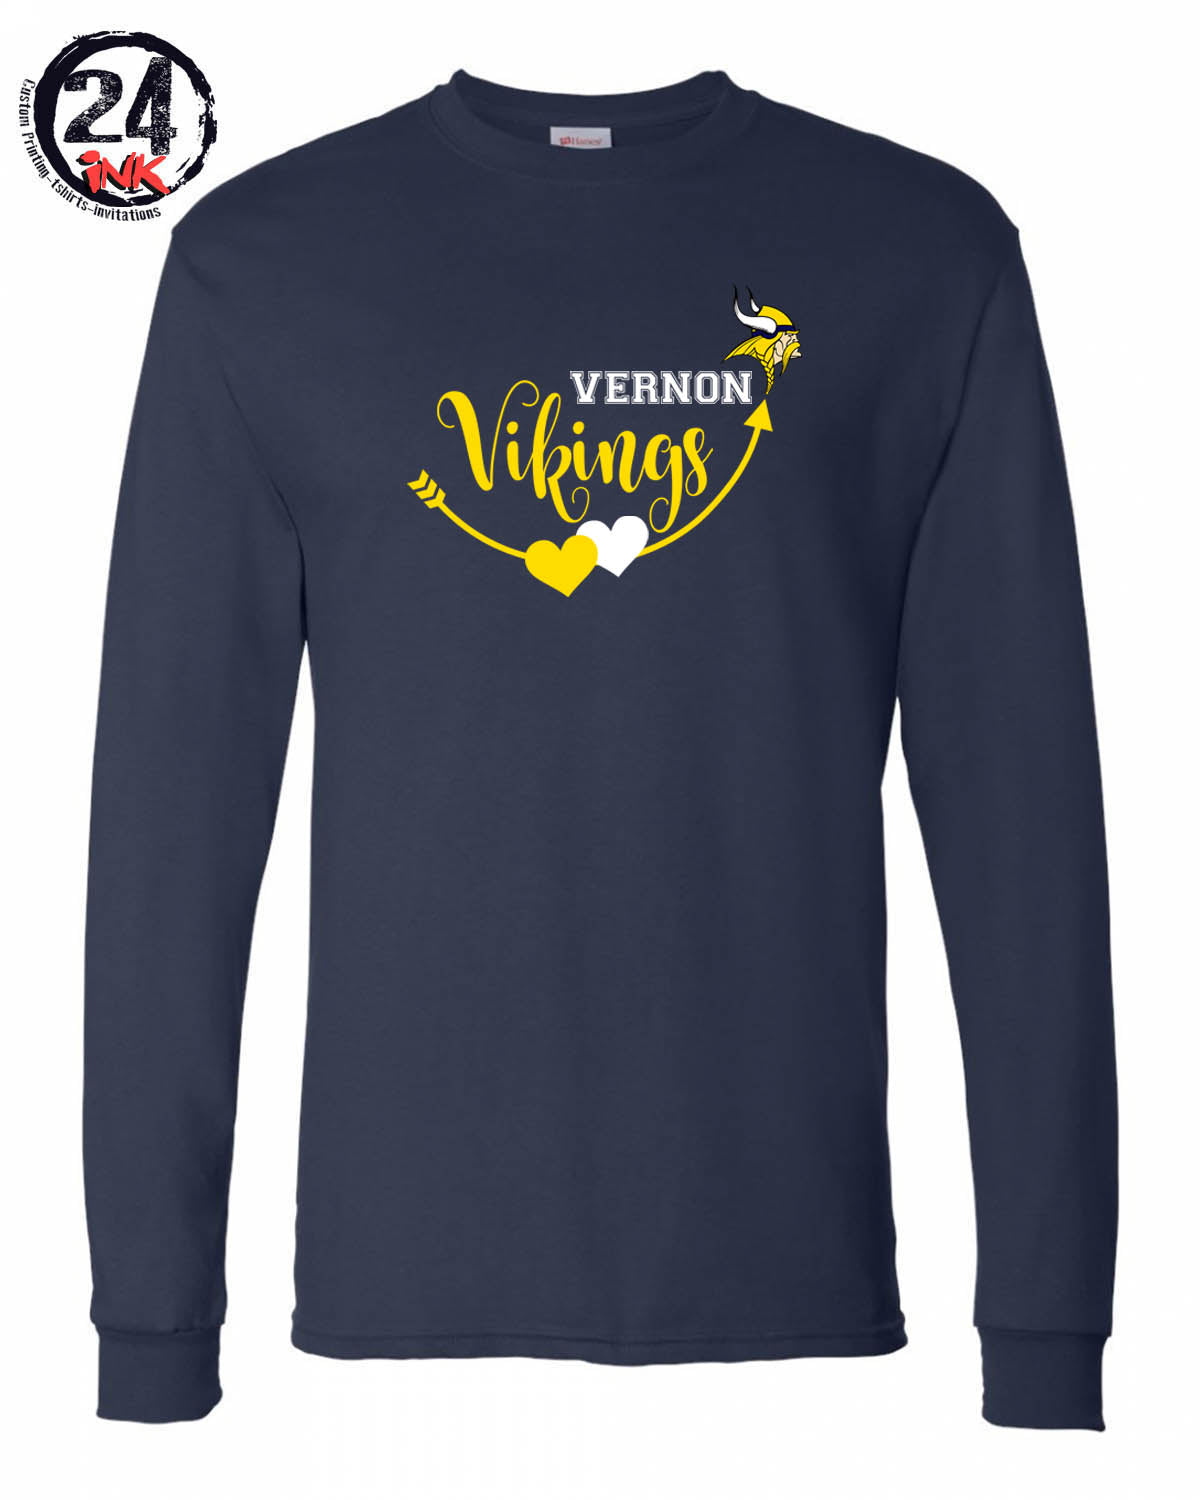 Vernon Hearts Long Sleeve Shirt